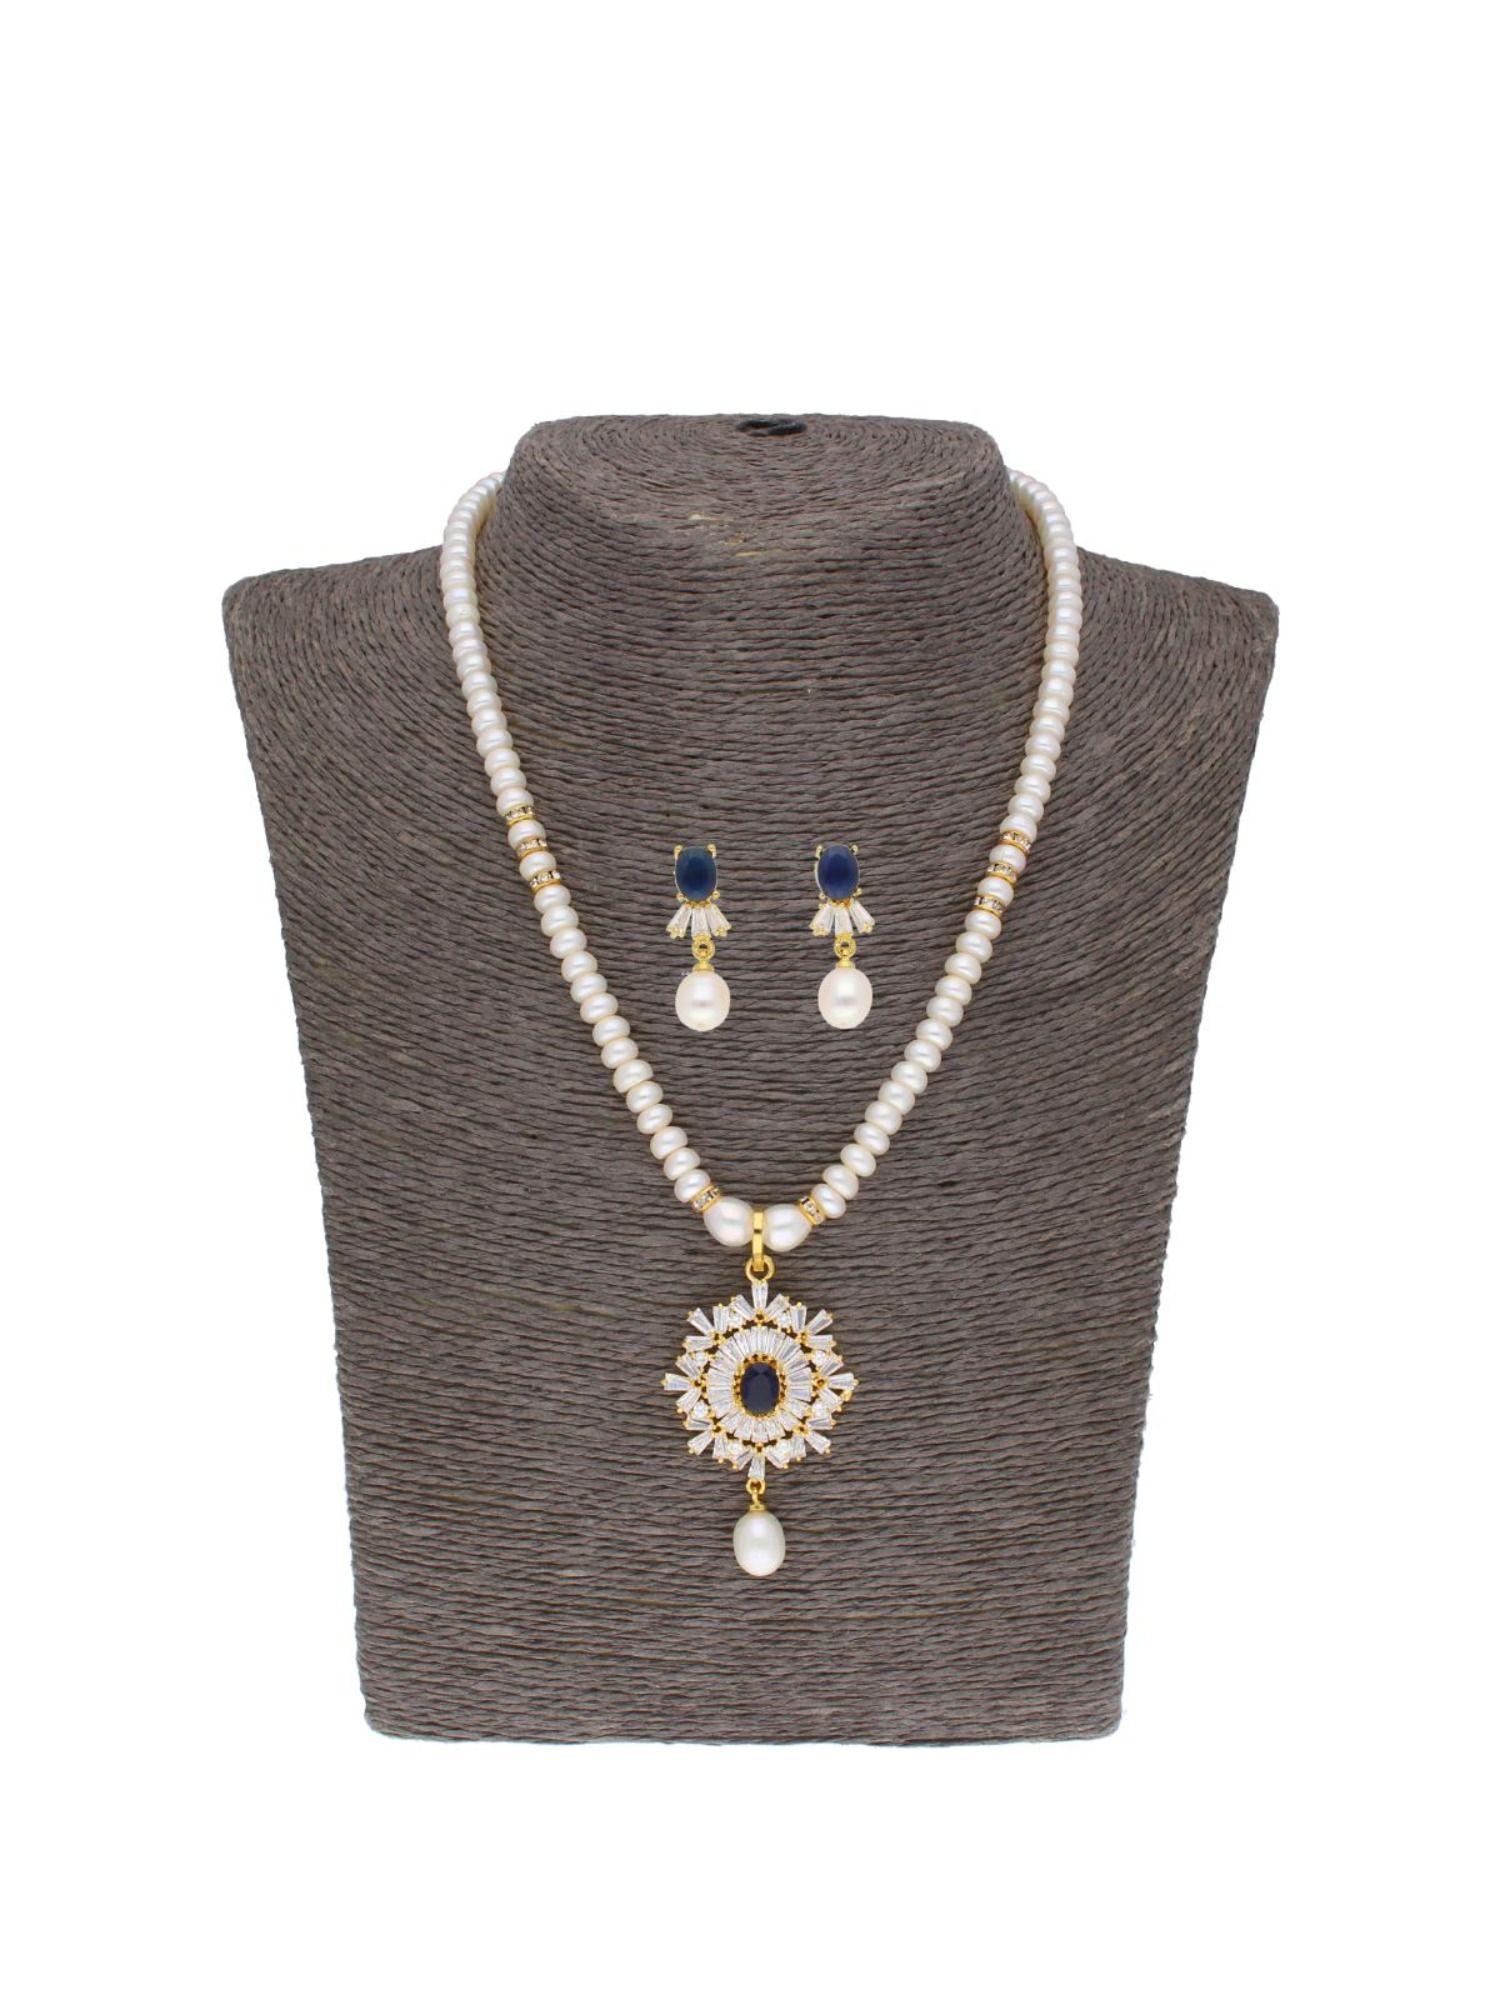 yami pearl necklace set